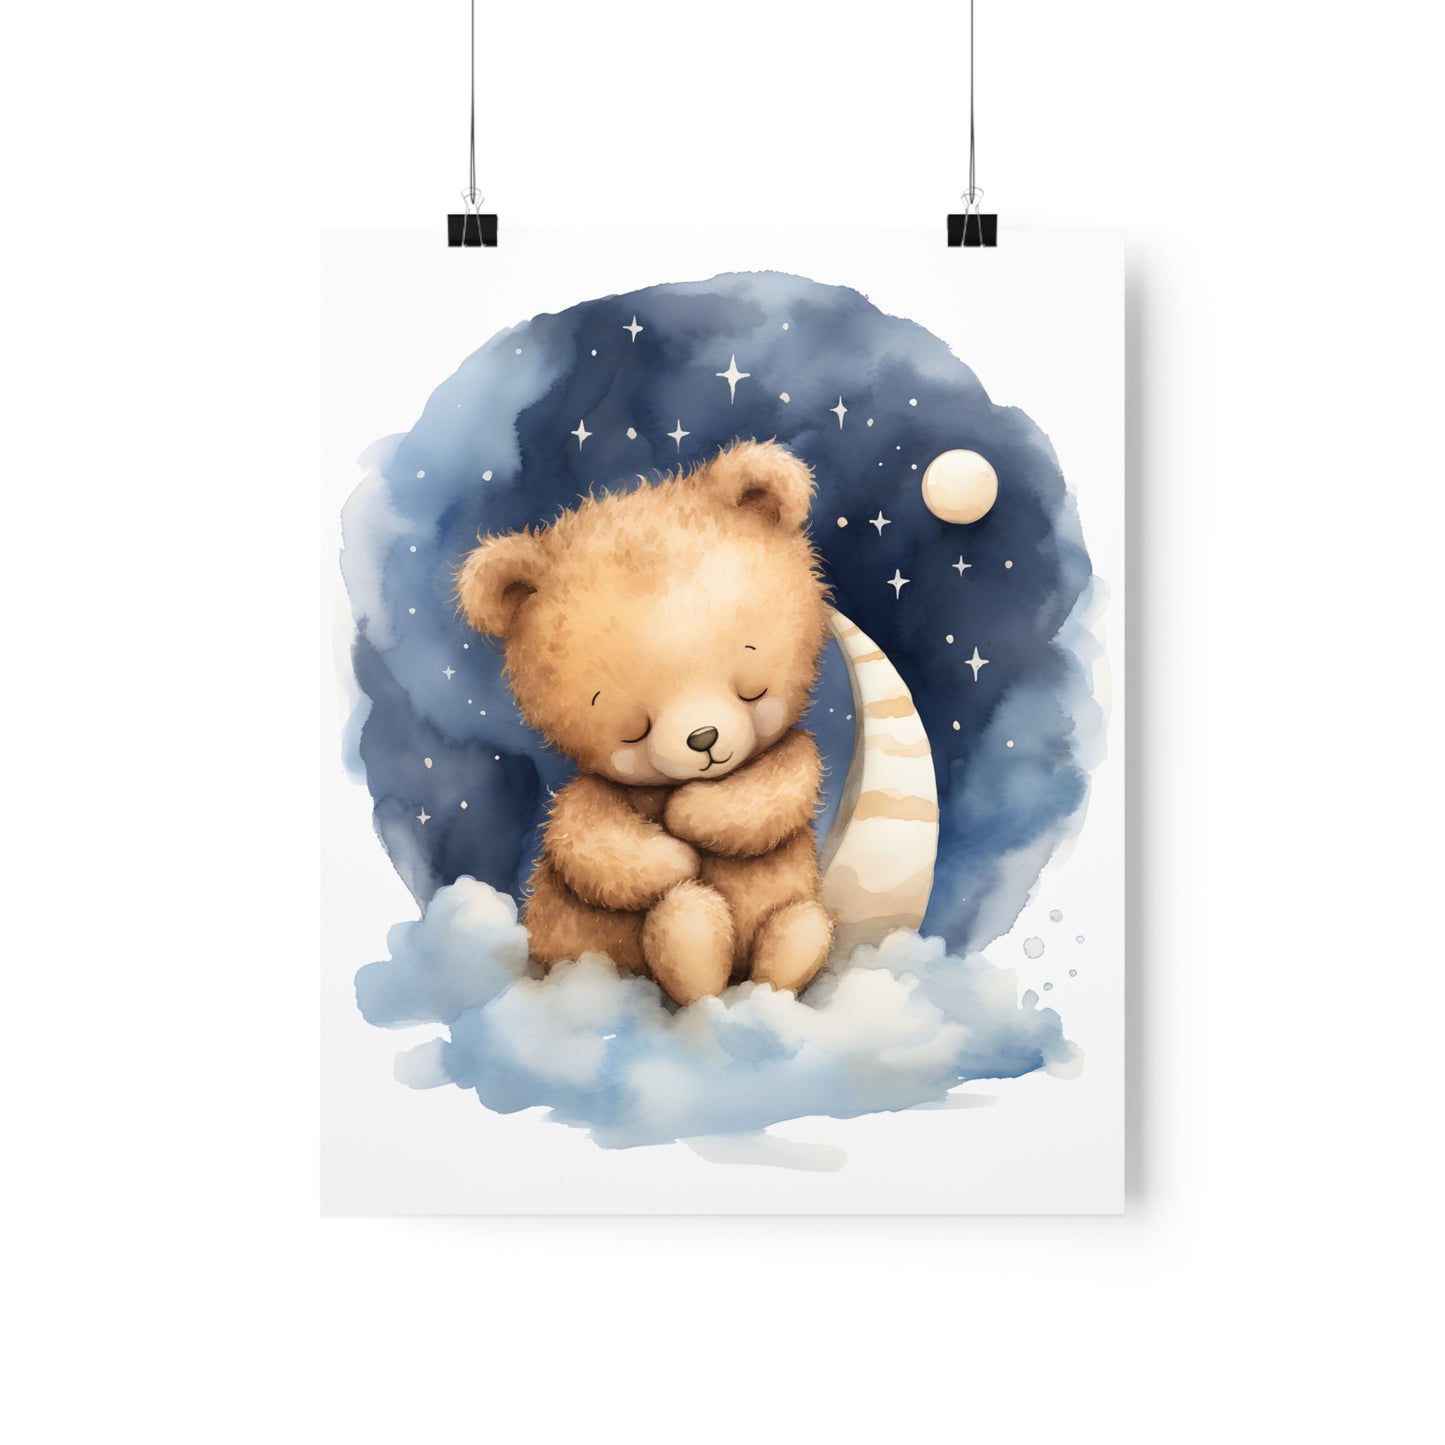 Teddy Bear Print, Bear Nursery Decor, Watercolor Art, Light Blue Nursery Poster, Baby Room Wall Art, sleeping animals, Animals Nursery Art - CosmicDeva